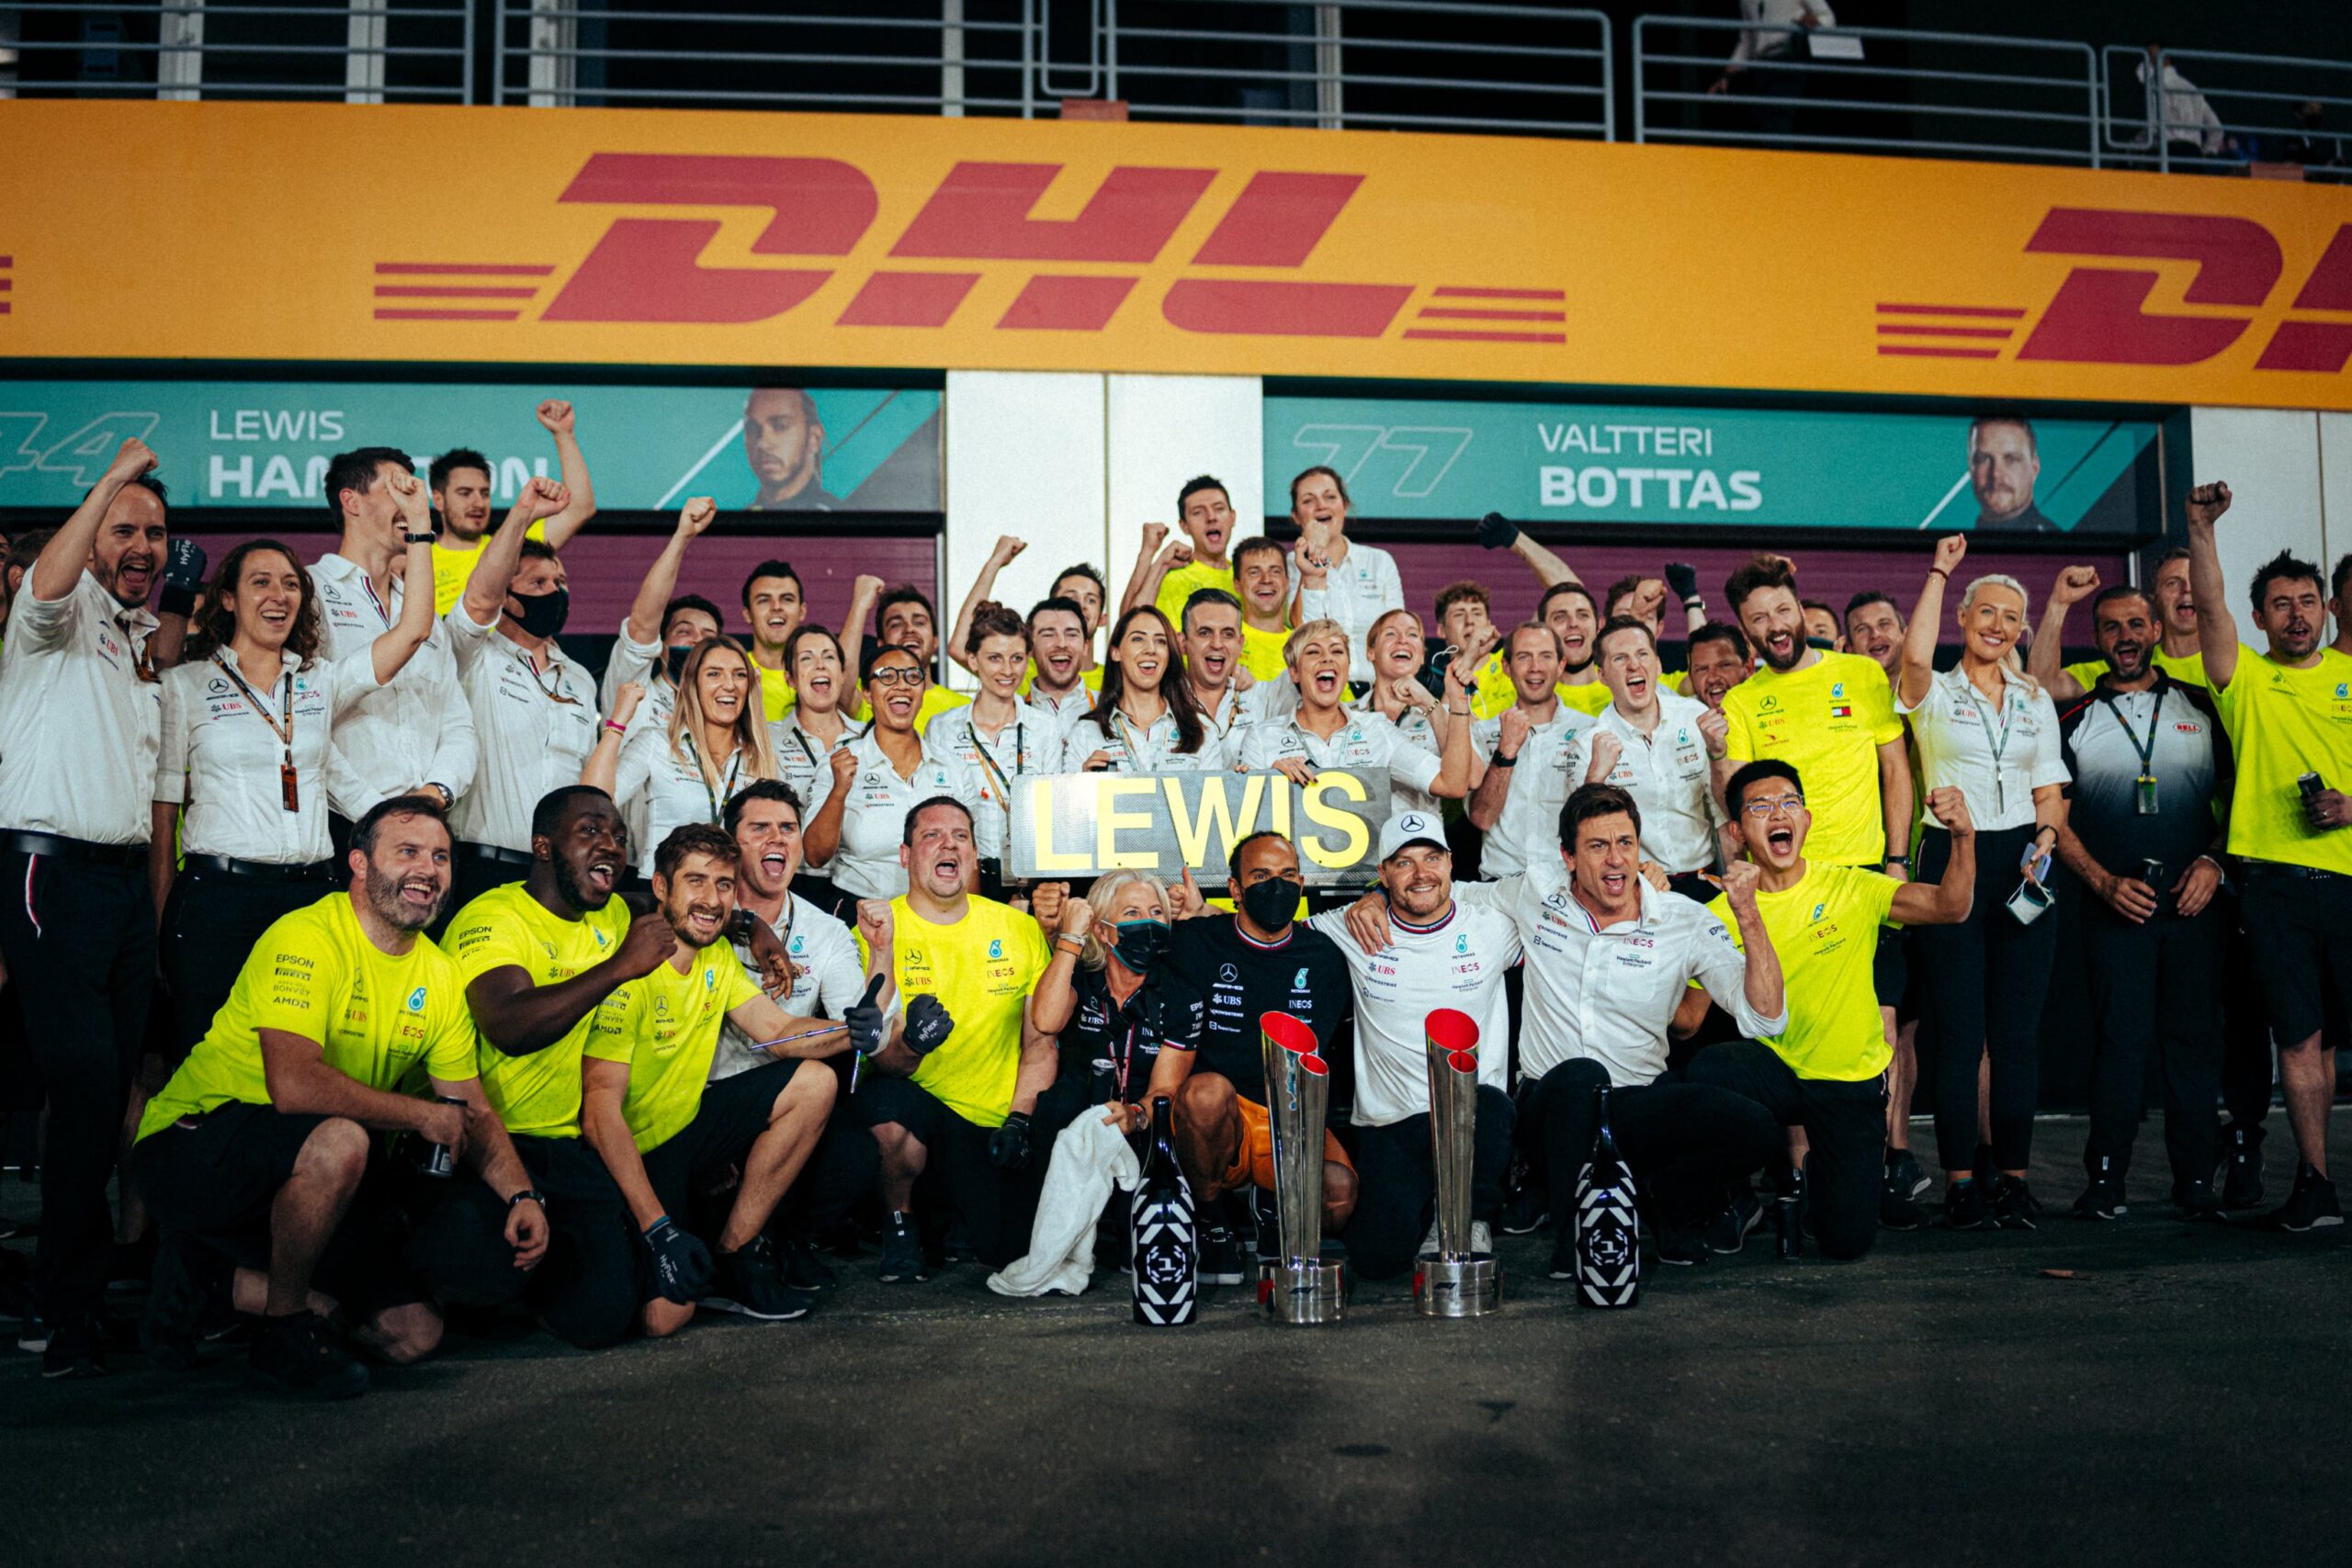 Hamilton venció a Verstappen en Qatar, Alonso en el podio